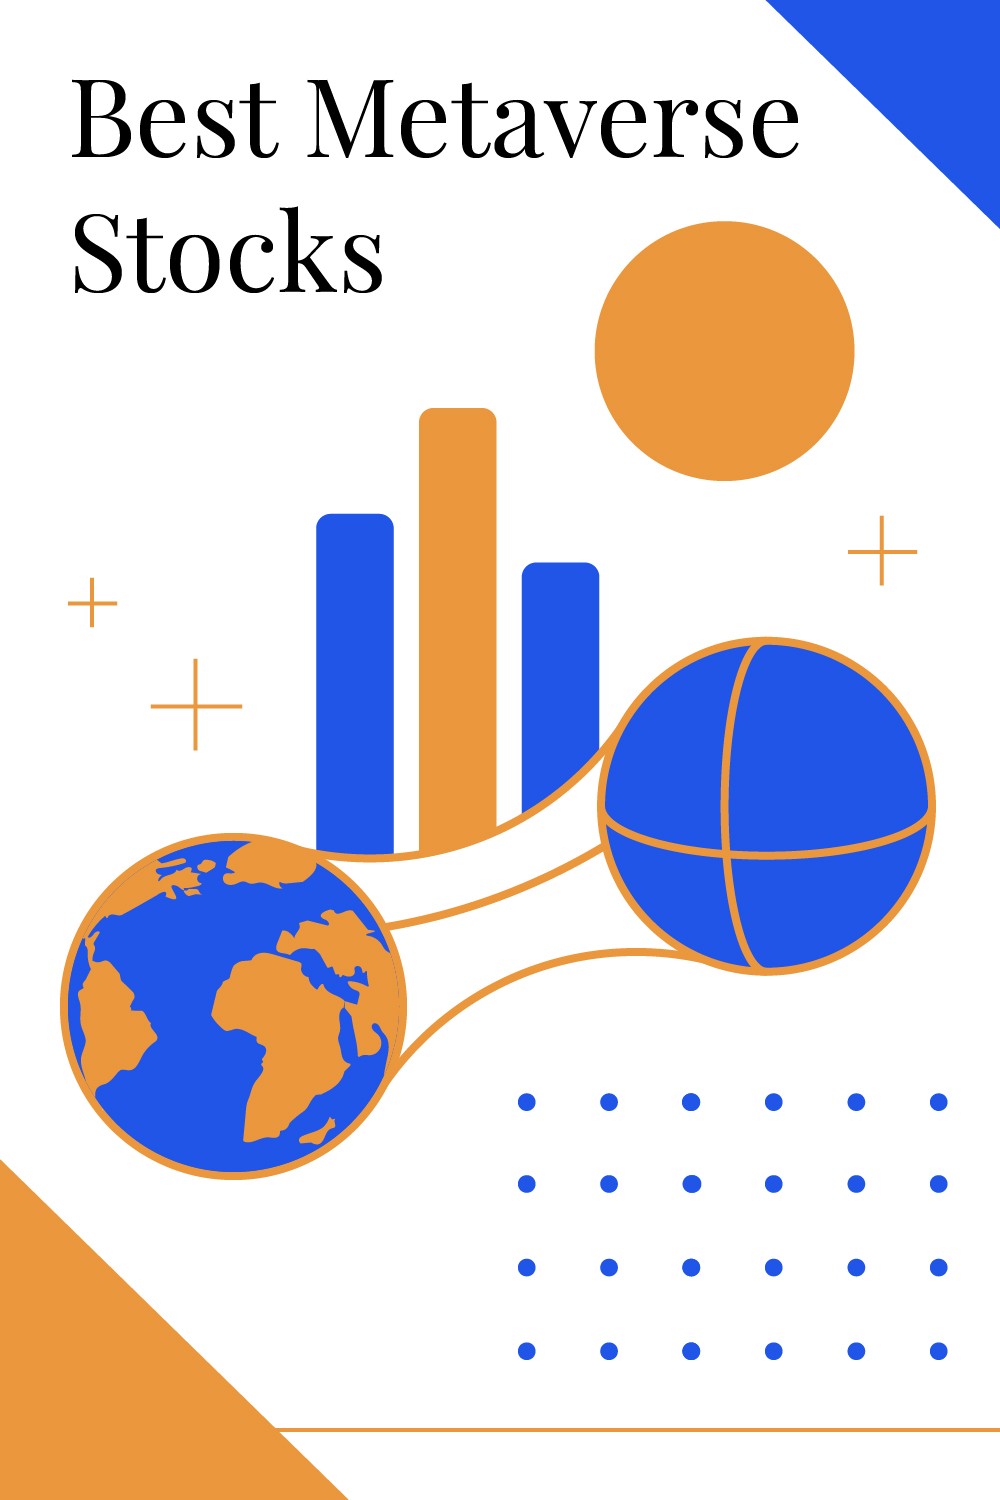 Best Metaverse Stocks